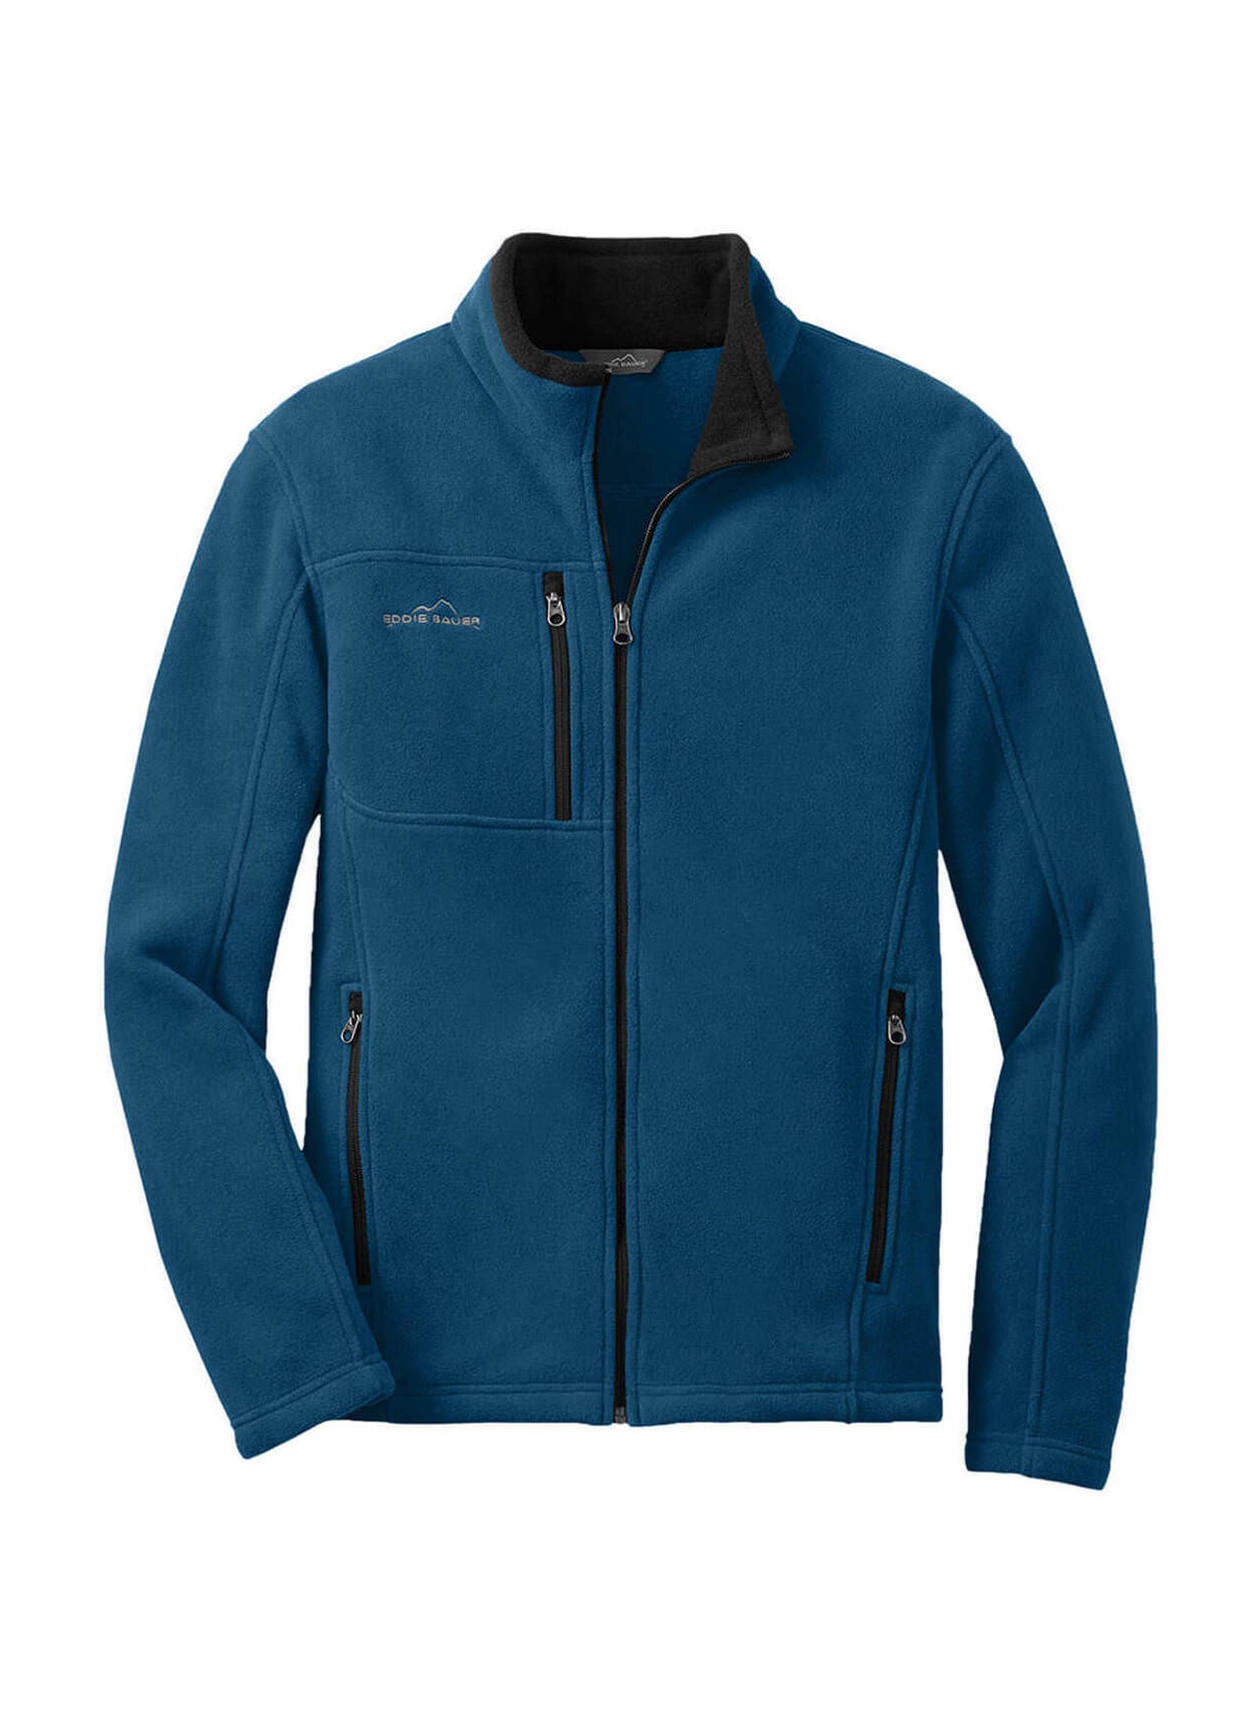 Eddie Bauer Men's Deep Sea Blue Fleece Jacket